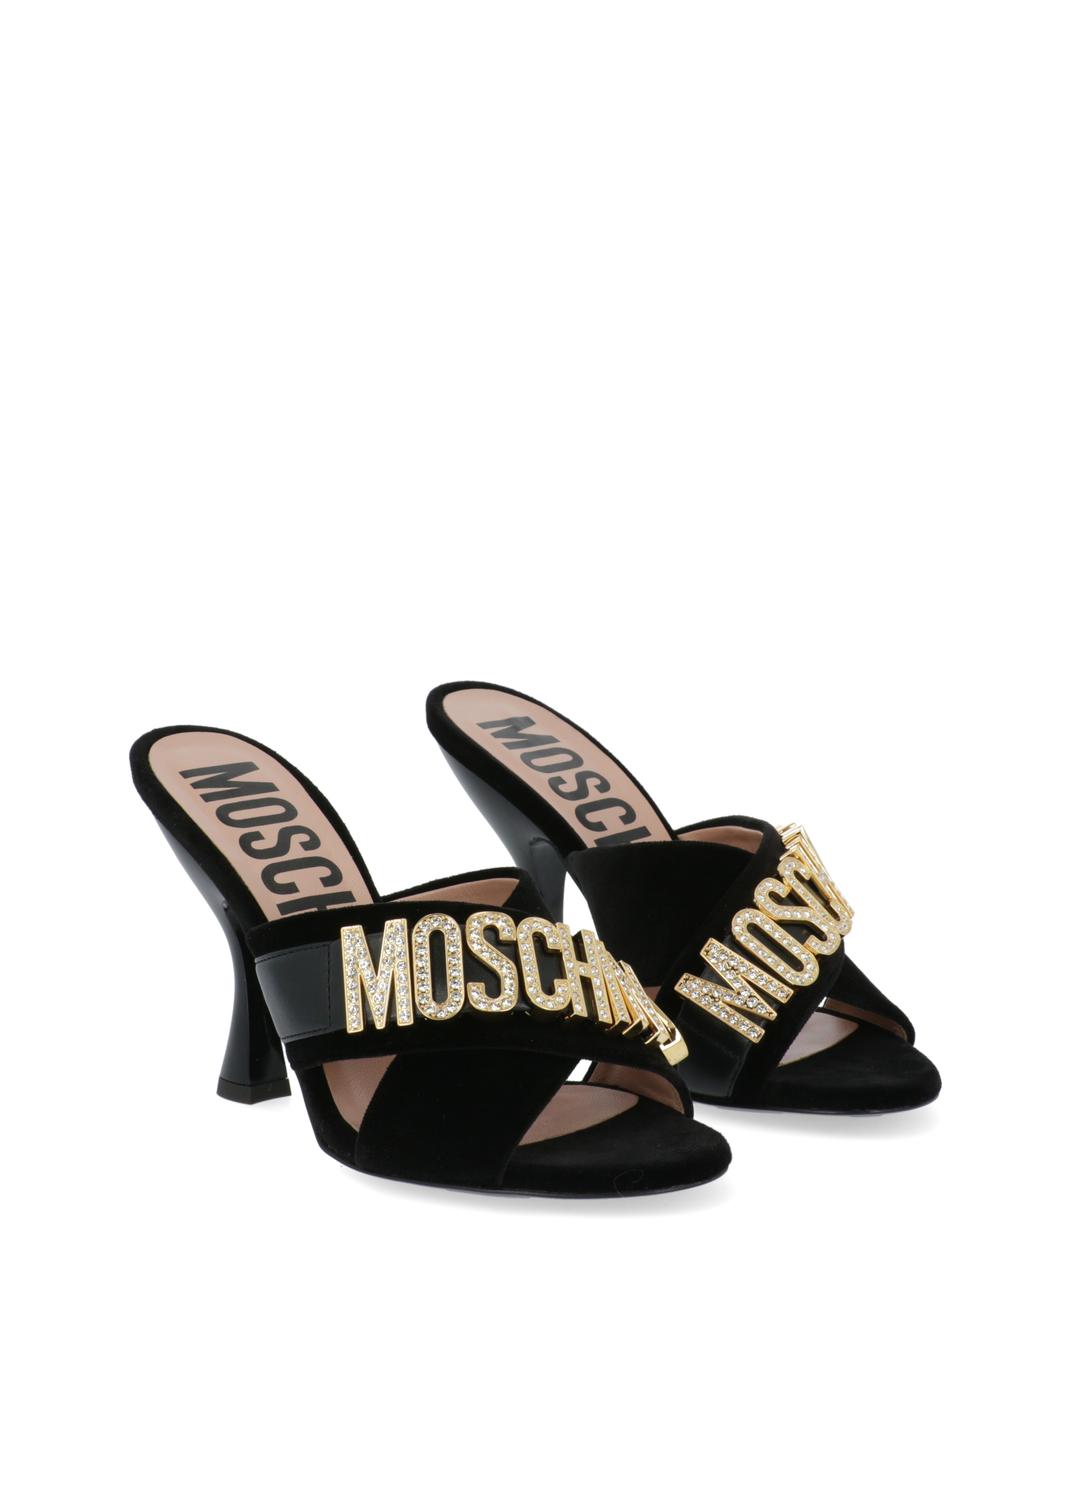 Moschino sandalias altas Lettering MSC-MA2830A